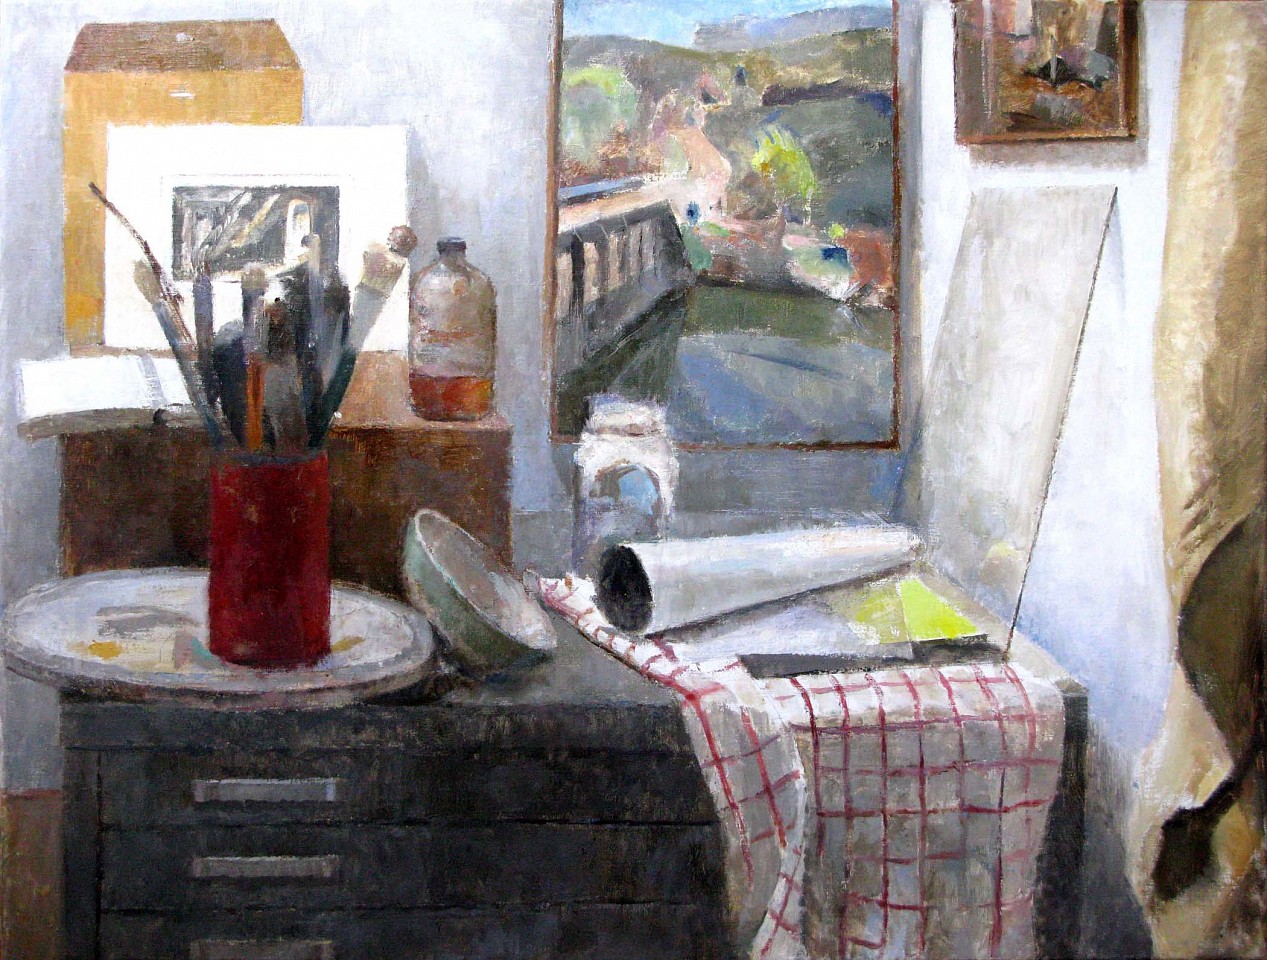 Peter Colquhoun
Corner of the Studio, 2010
oil on linen, 31 x 41 in.